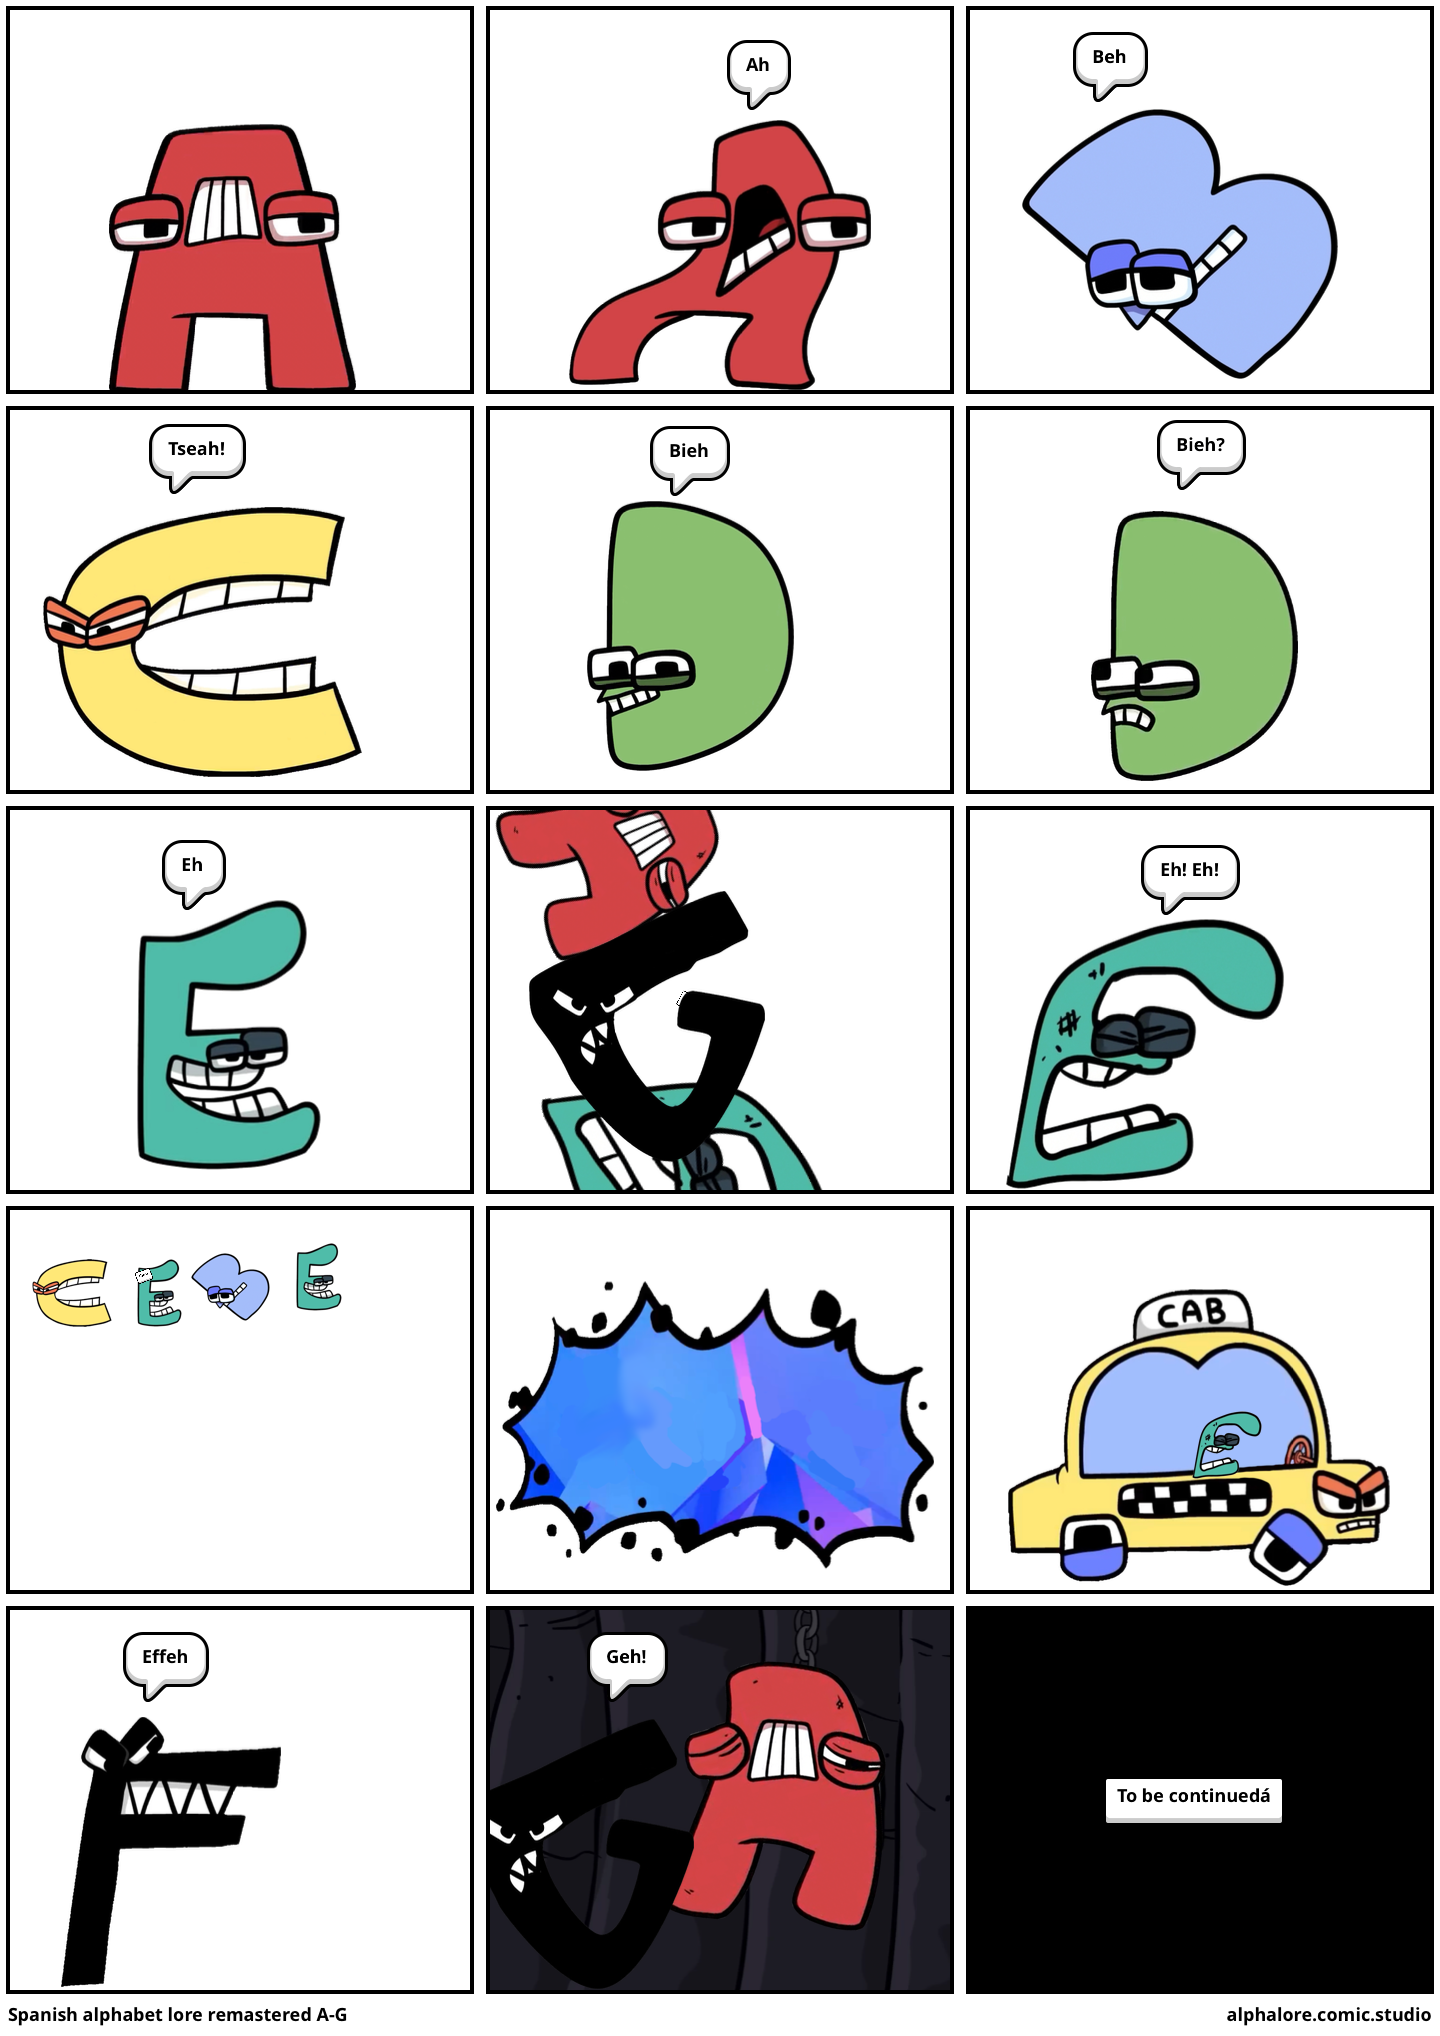 if i made a german alphabet lore - Comic Studio